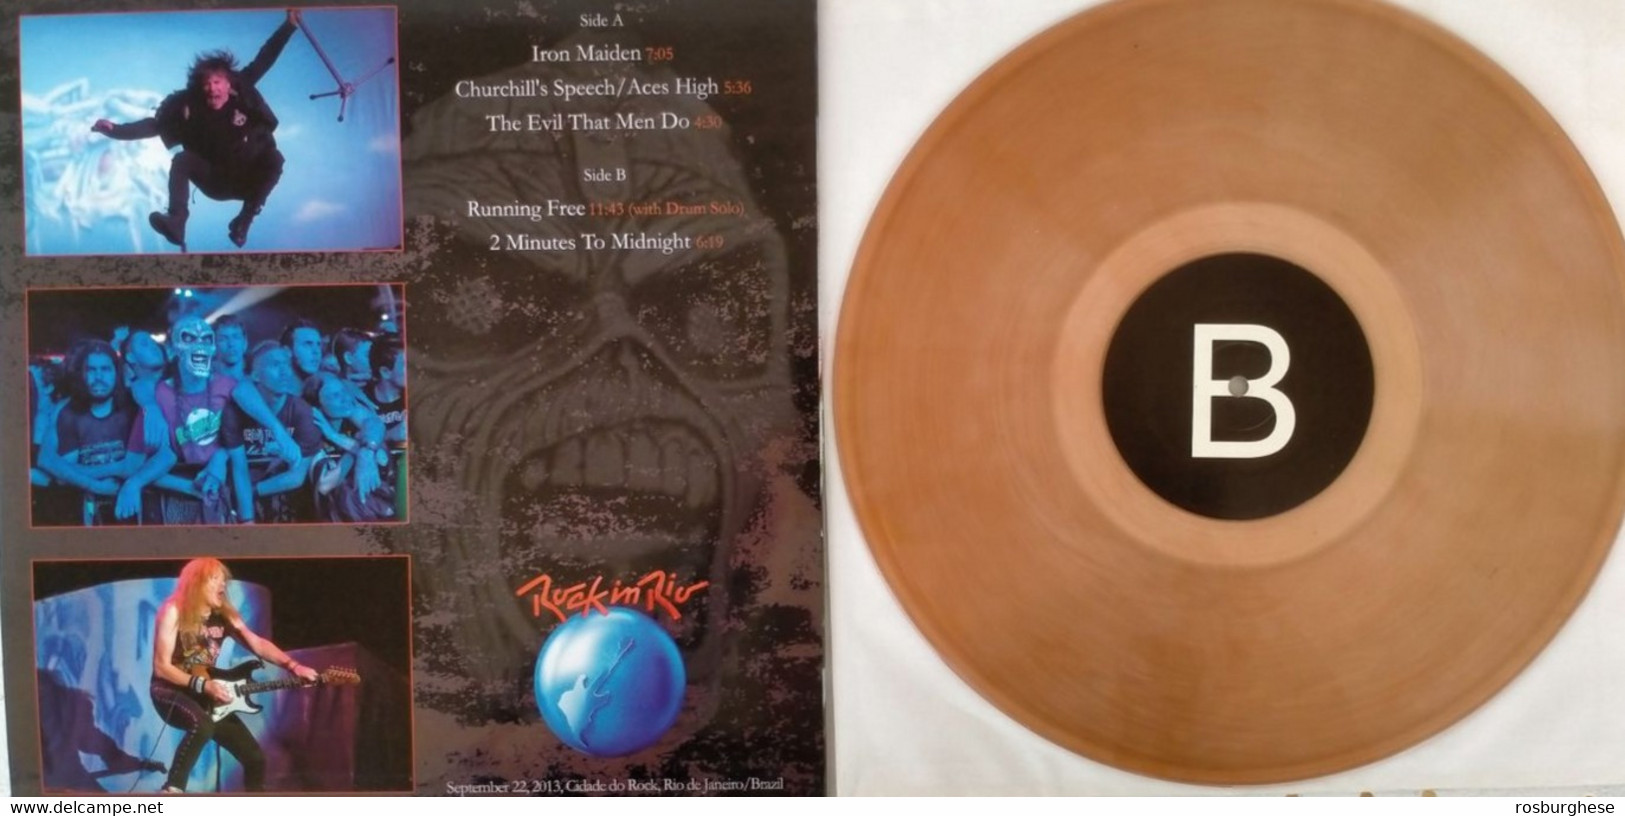 Iron Maiden Air Raid Siren VINILE LP Trasparente 150 Copie - Editions Limitées